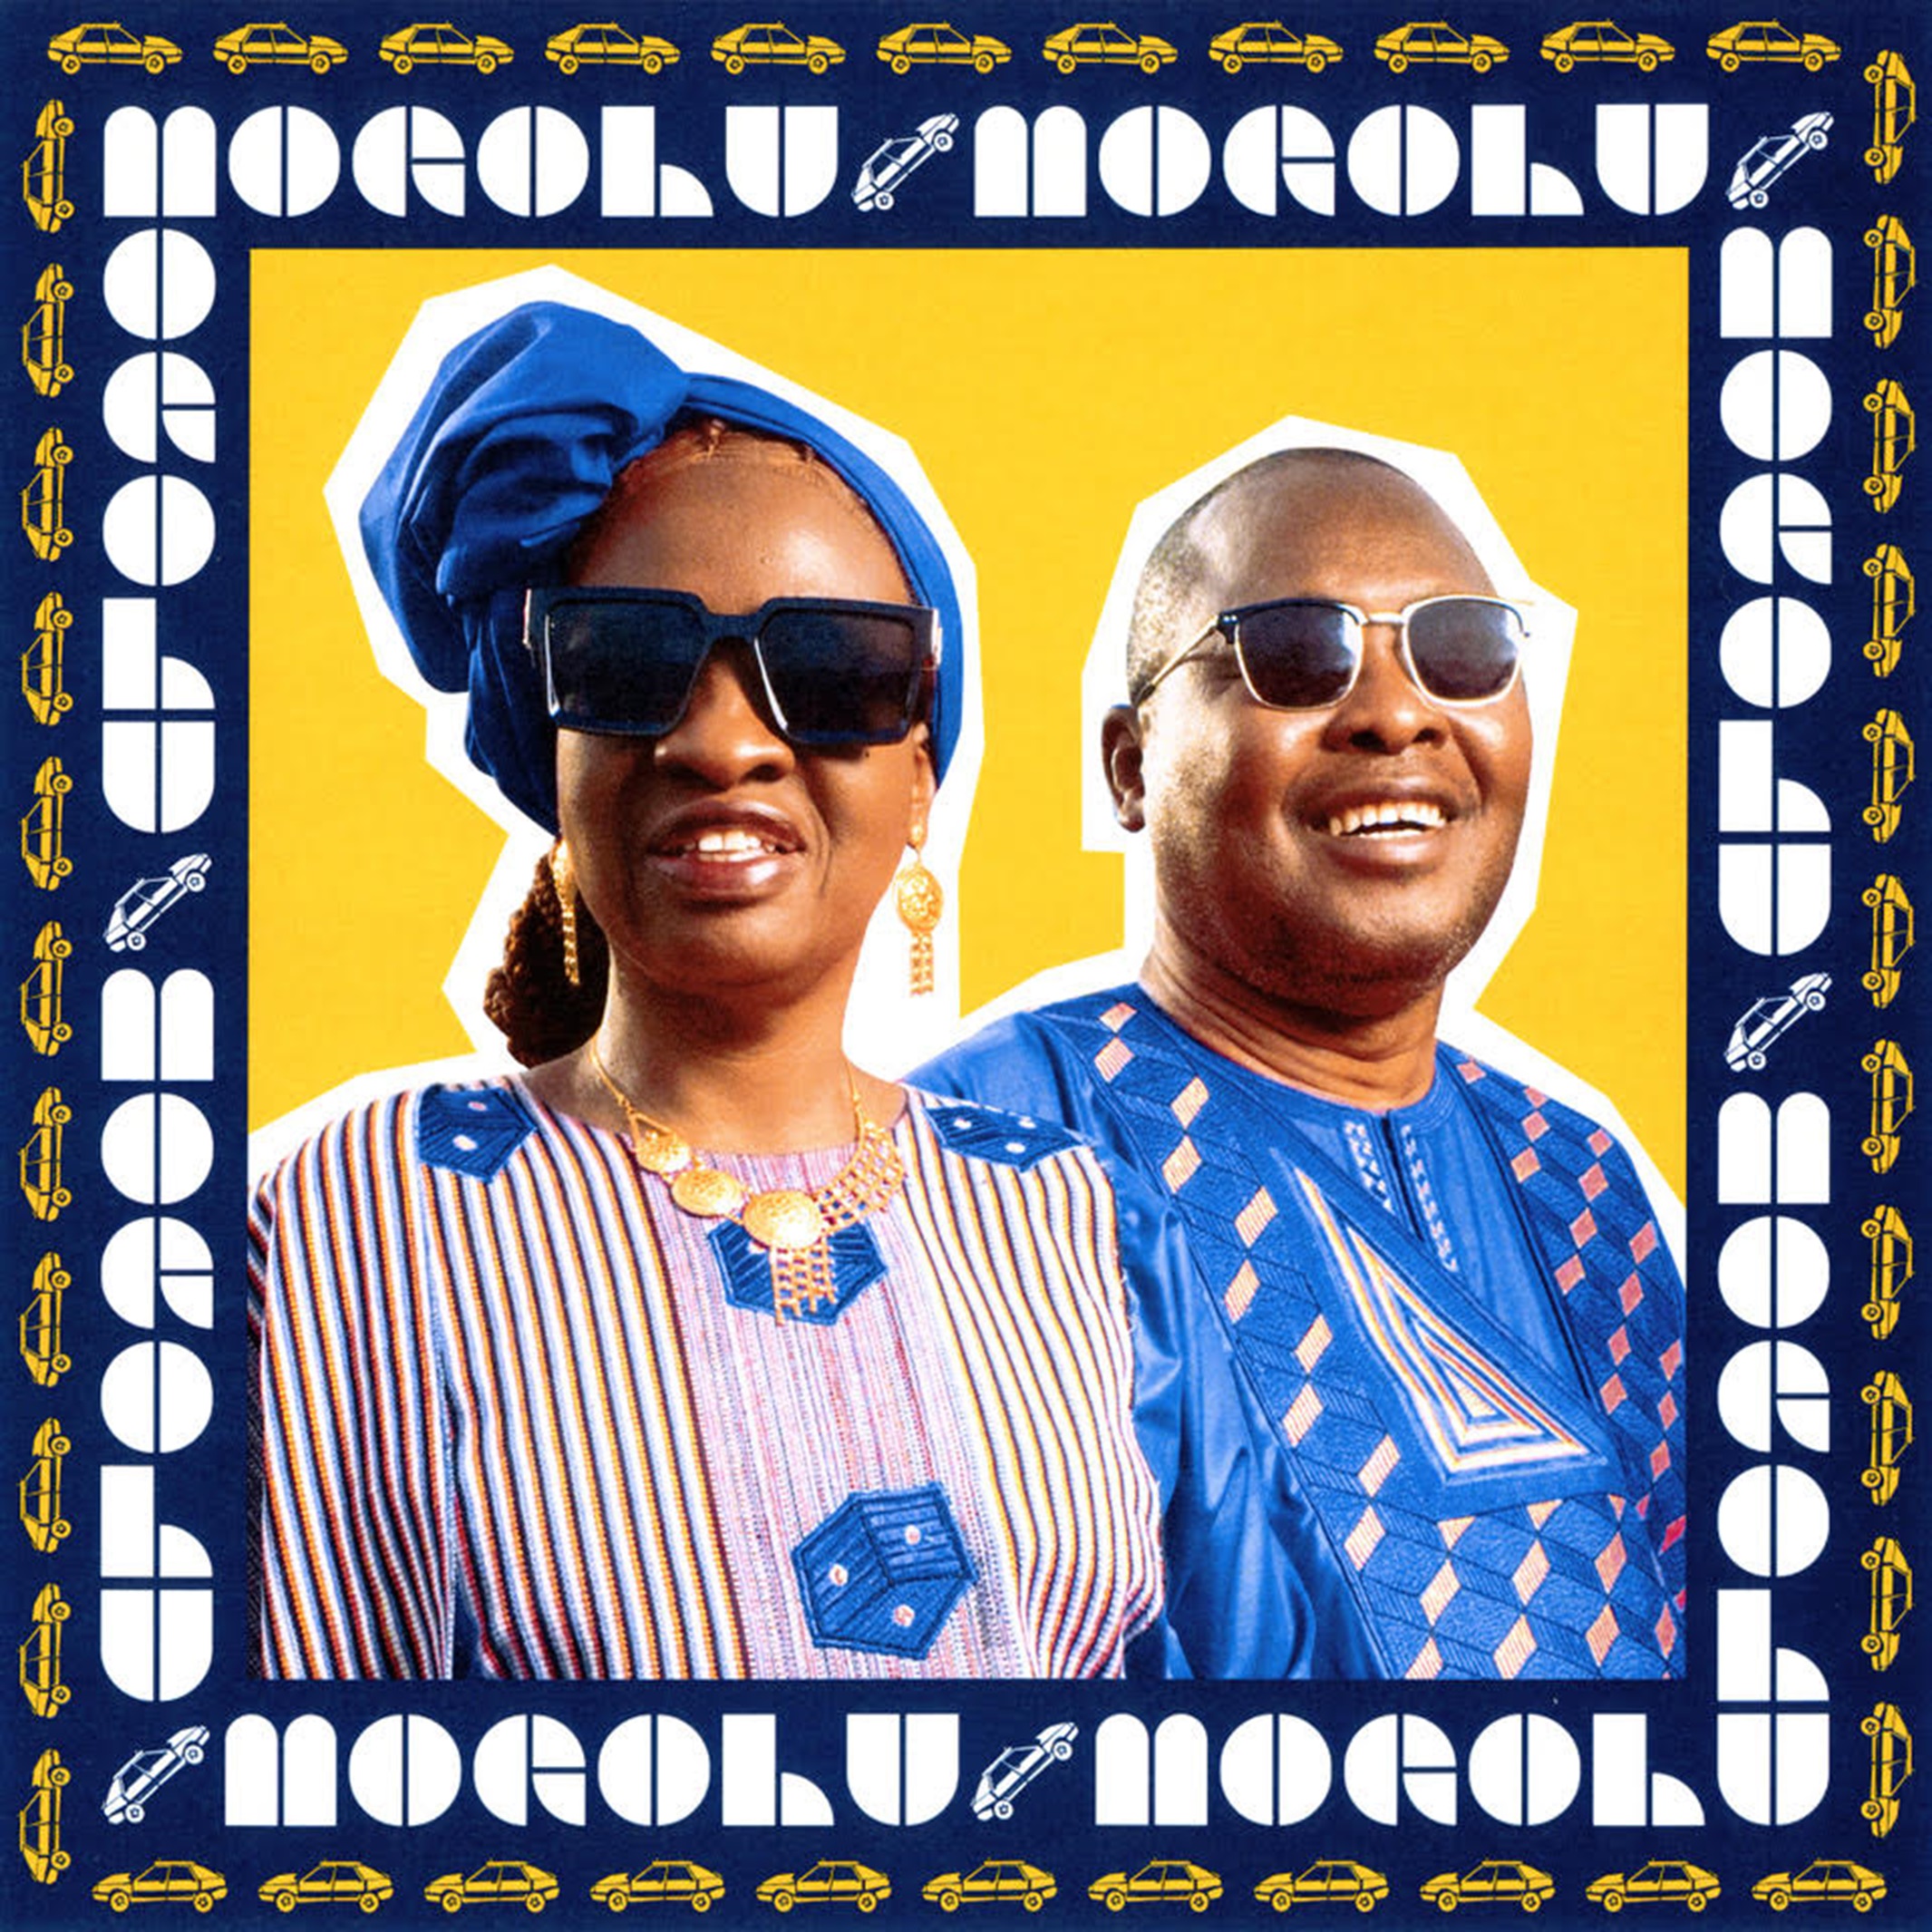 Amadou & Mariam Release New Single "Mogolu"